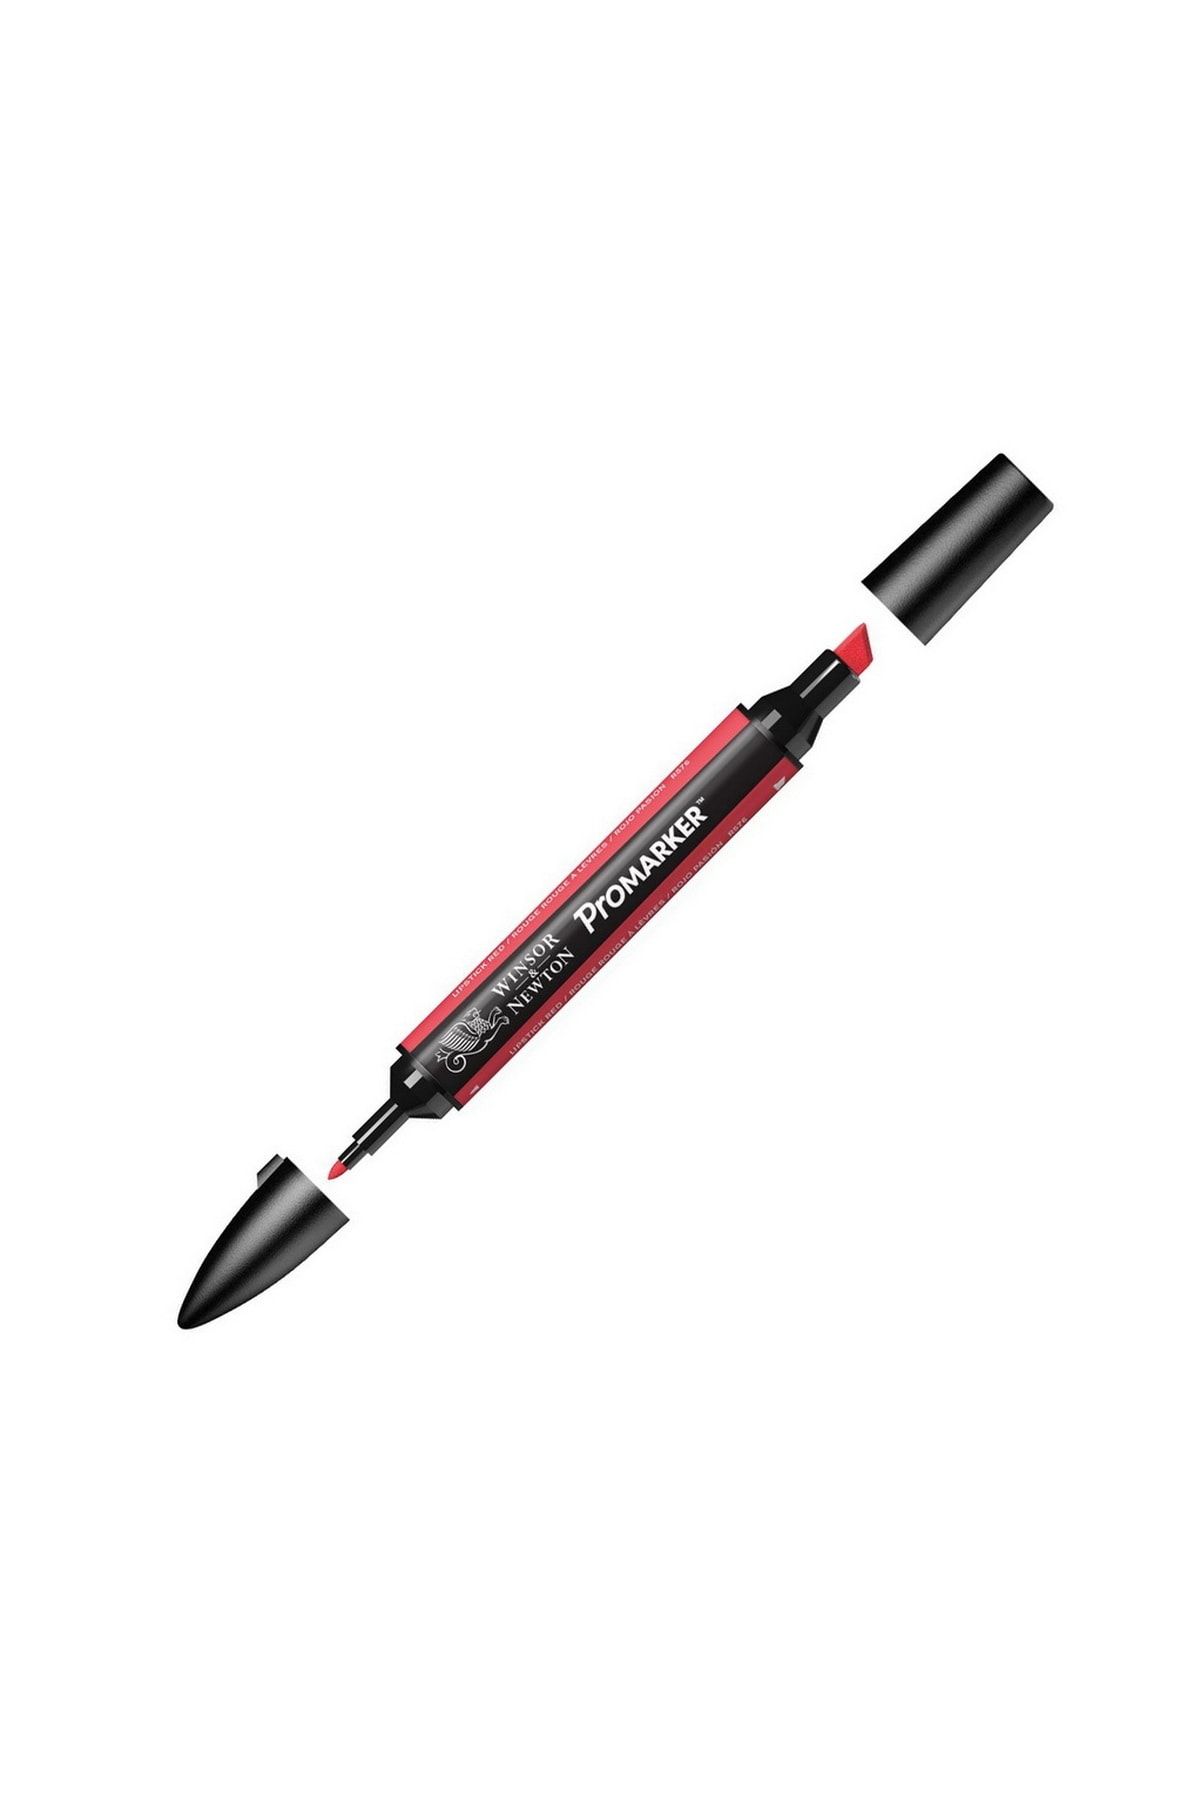 Winsor Newton Promarker Çift Uçlu Alkol Bazlı Grafik Çizim Kalemi Lipstick Red 181 (R576)